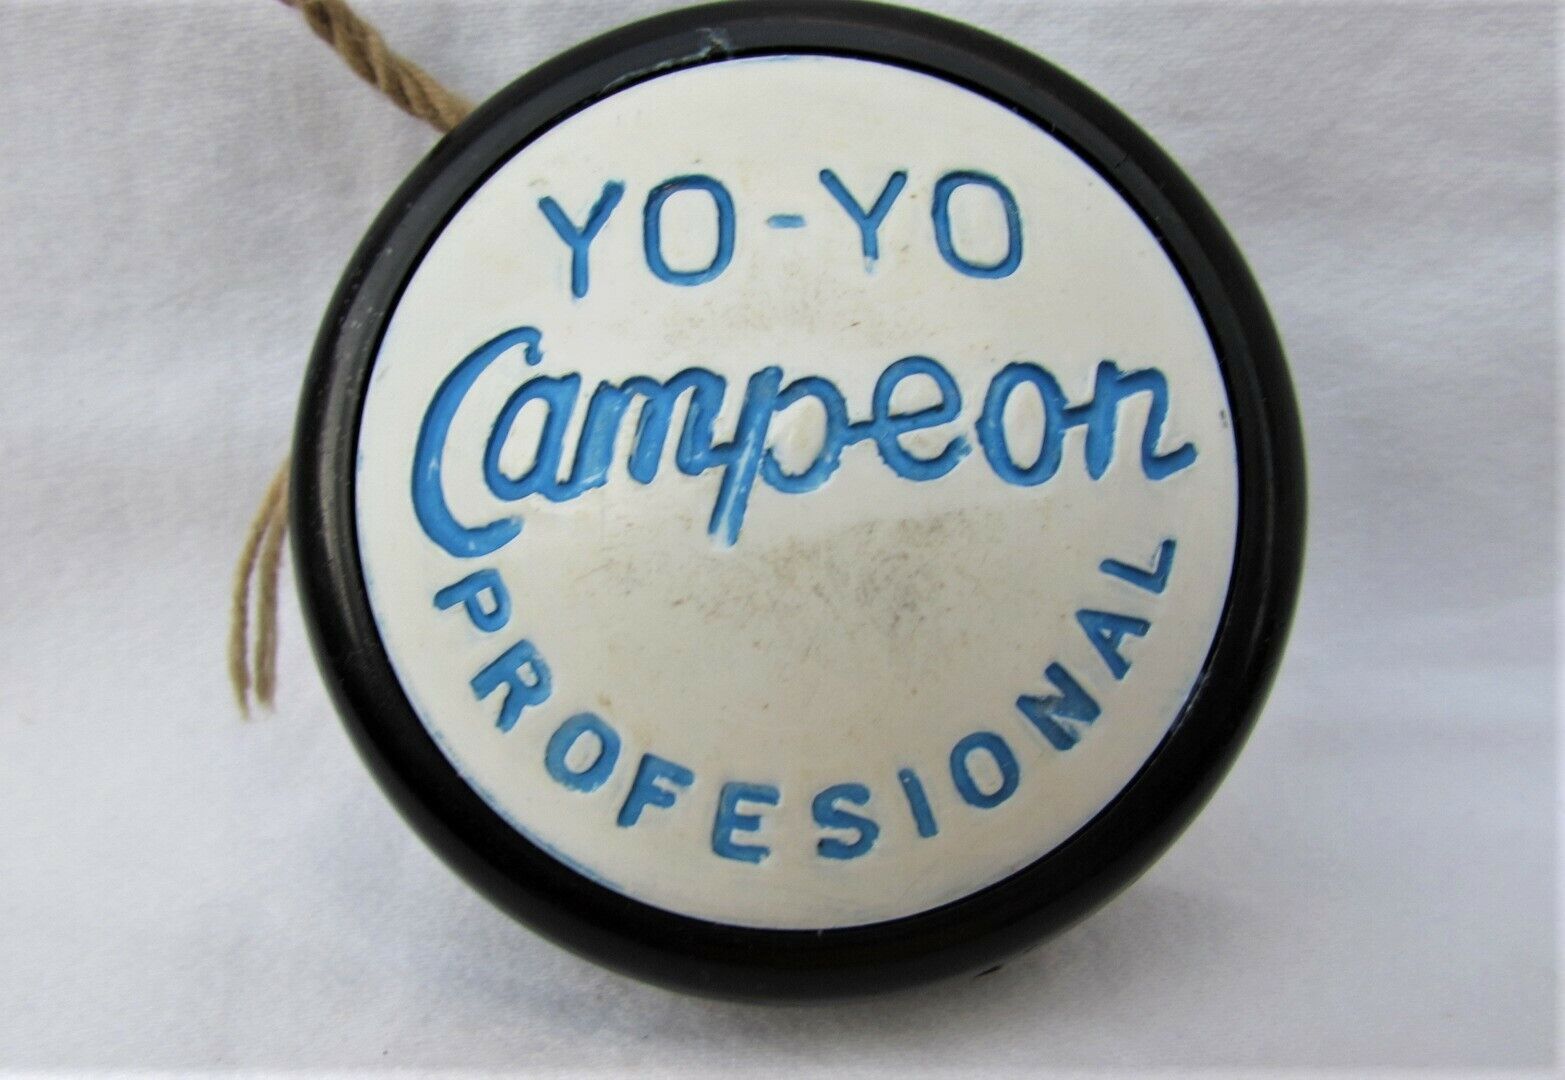 Yo-Yo Campeon Profesional made in Peru